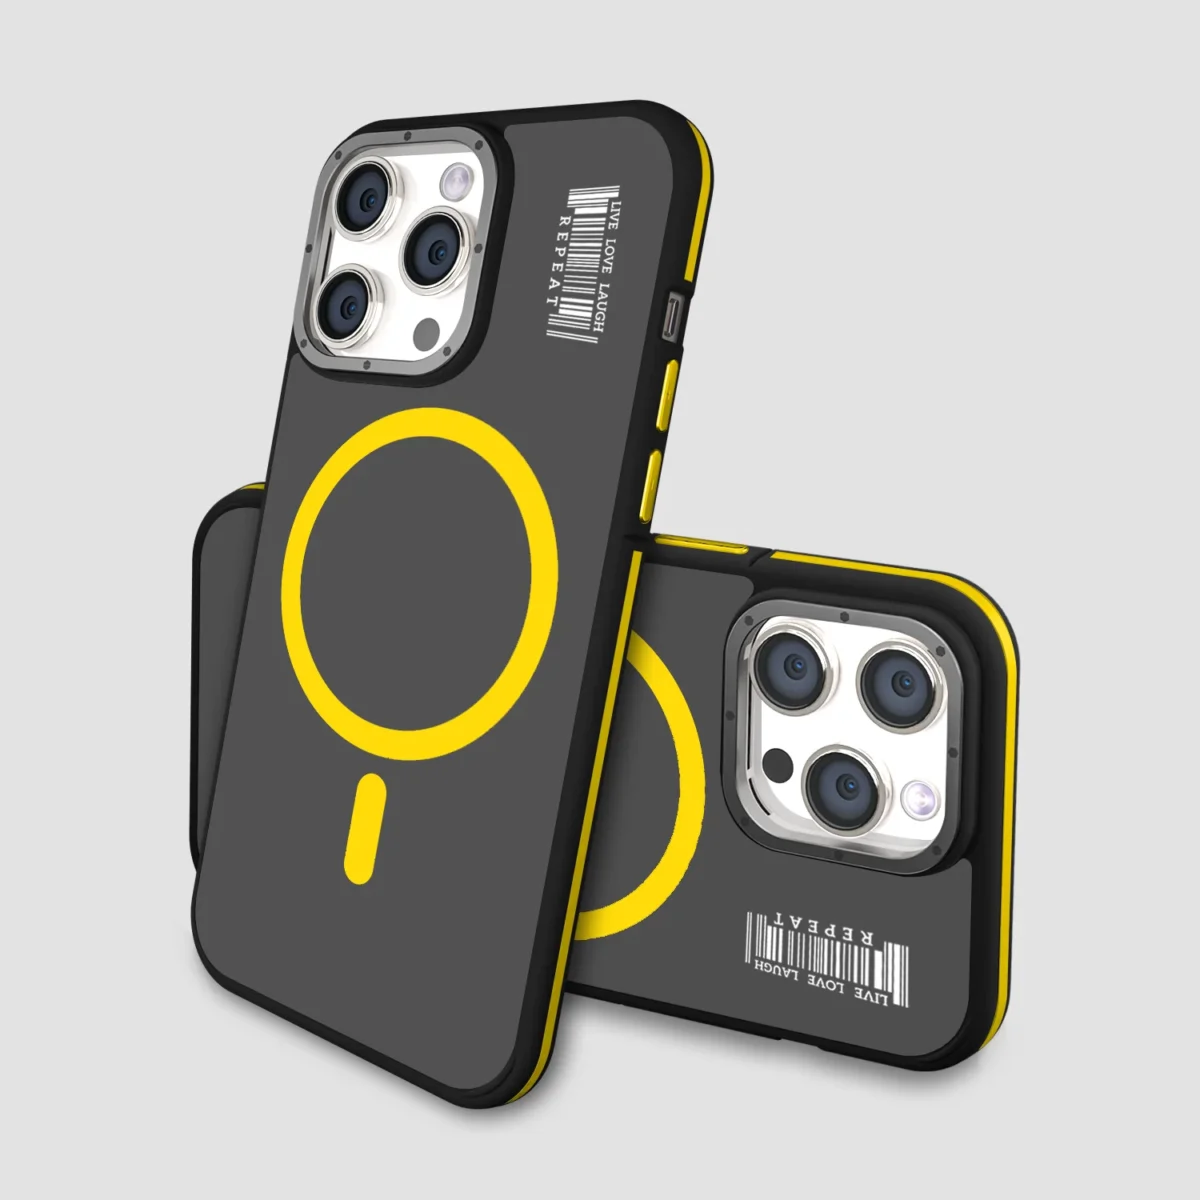 Gripp raigor iphone 15 pro 6. 1 with magsafe case yellow 2 gripp raigor iphone 15 pro (6. 1) with magsafe case - yellow